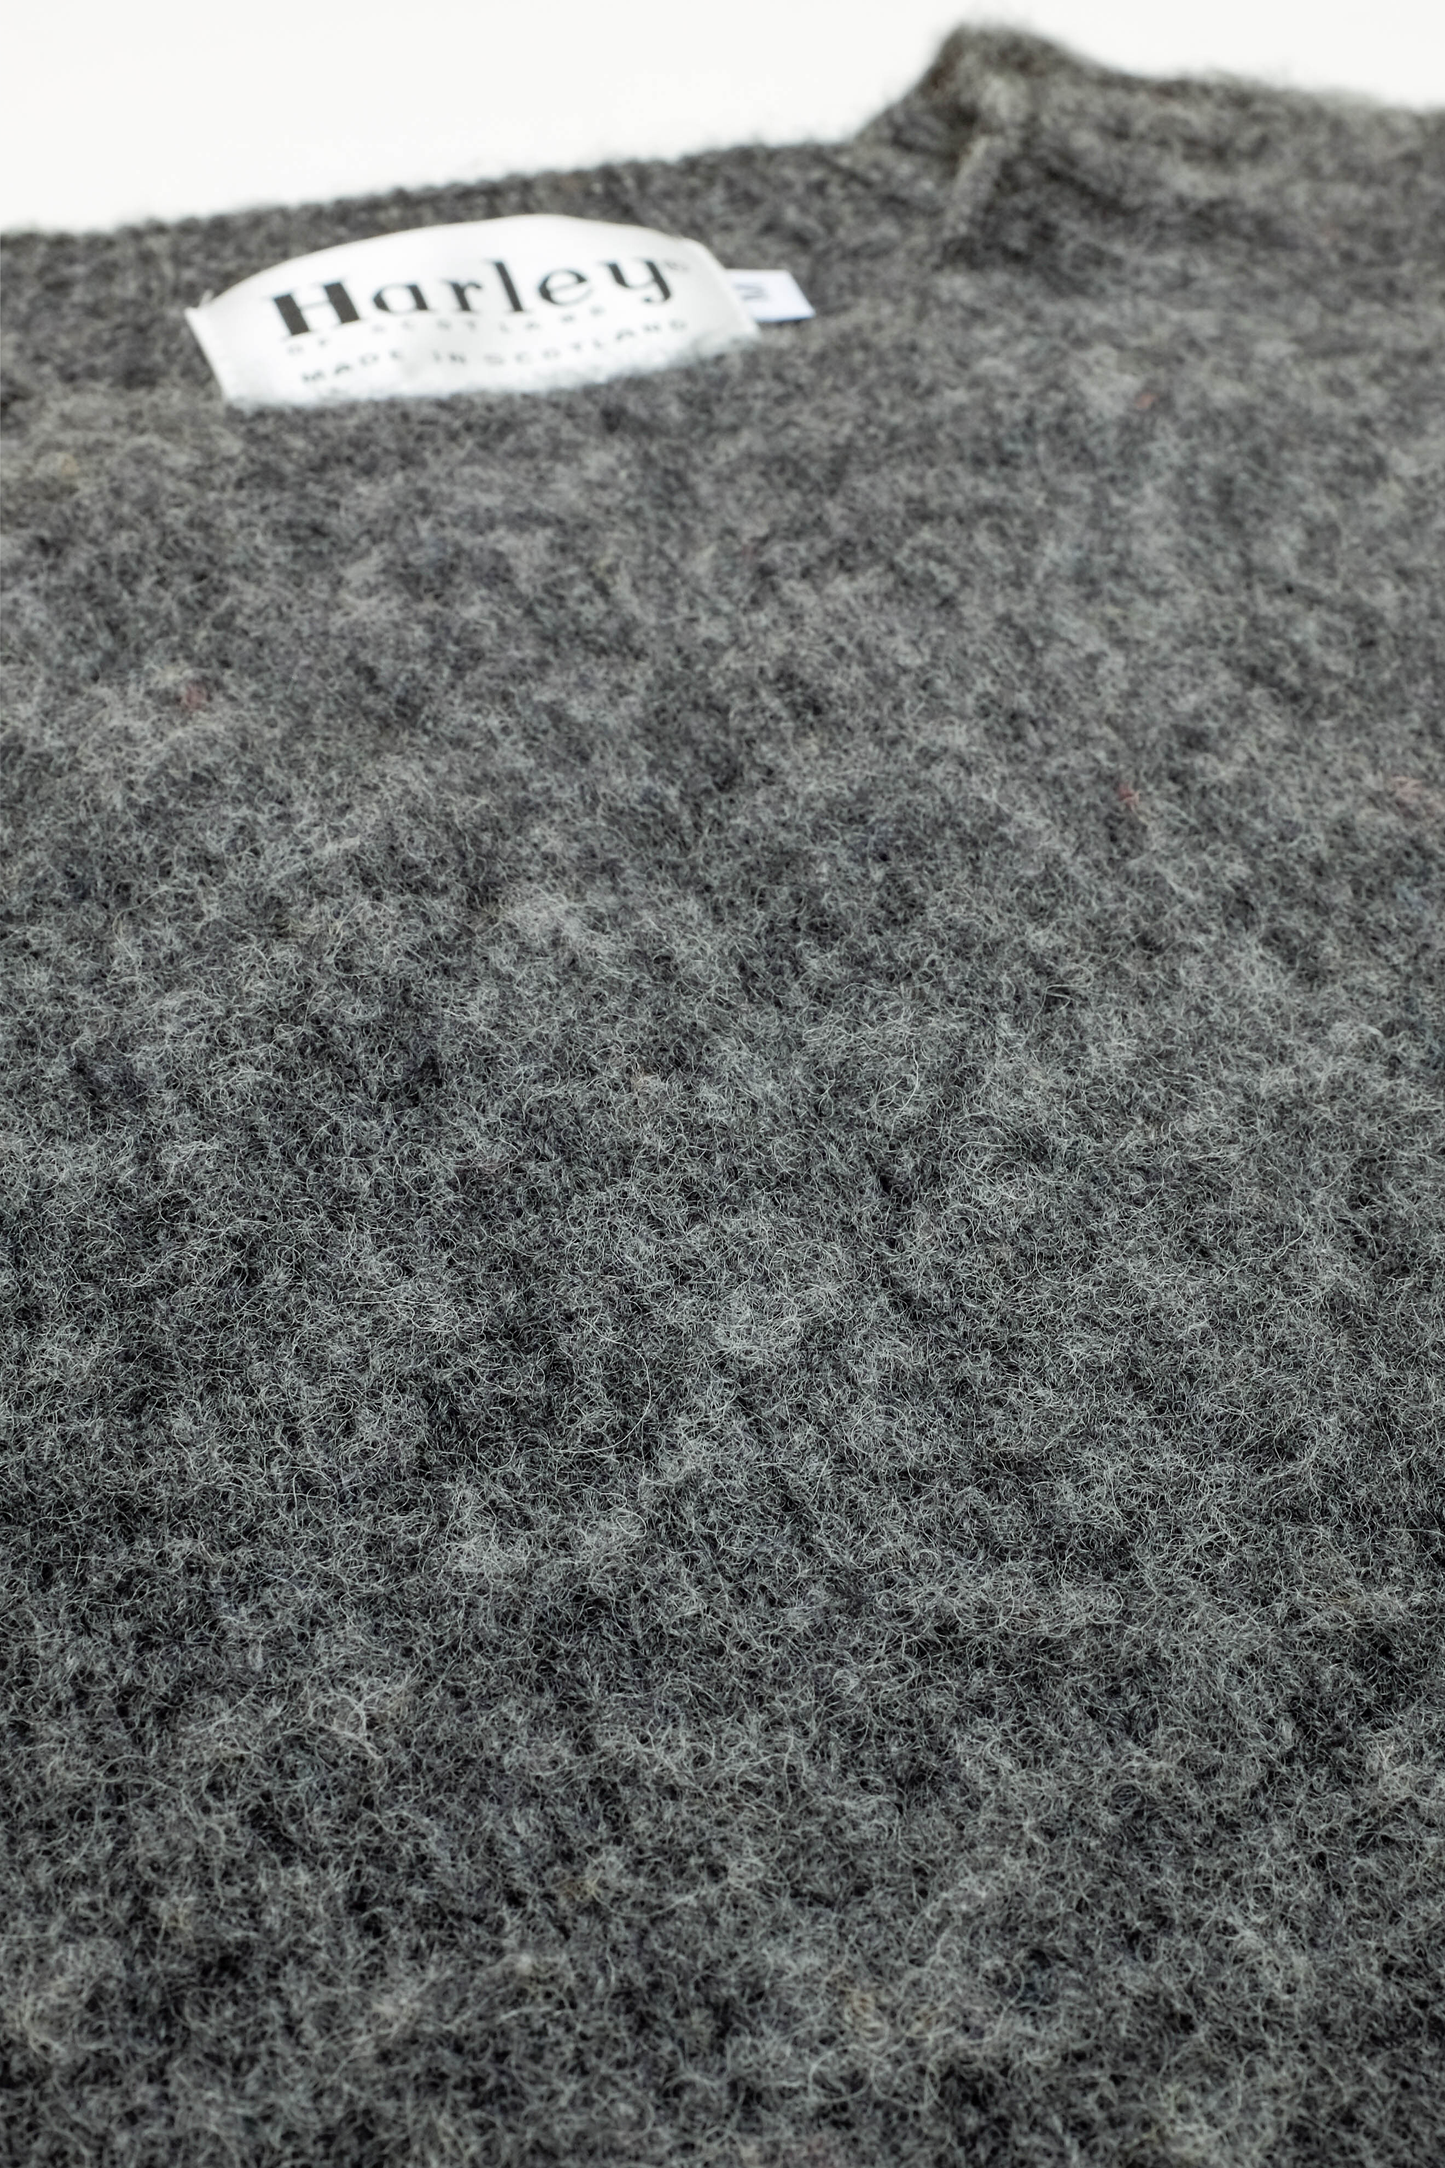 Shaggy Dog sweater in dark gray wool